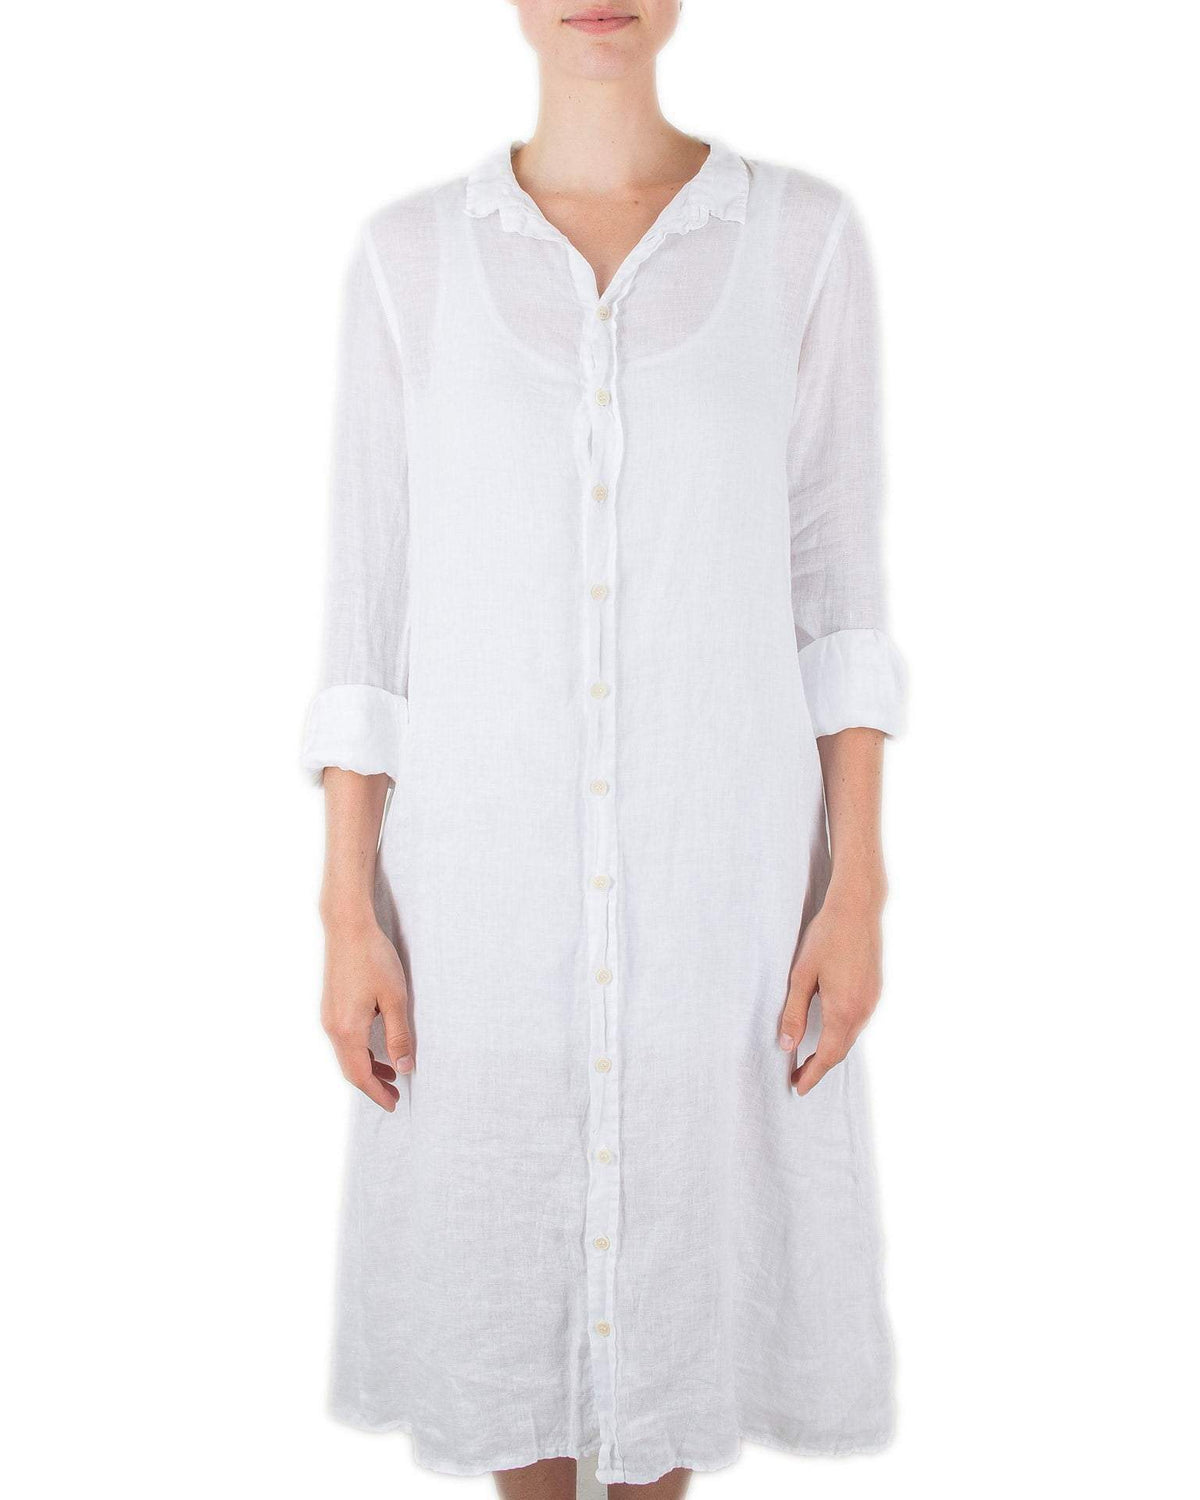 CP Shades Maxi Shirtdress in White Linen